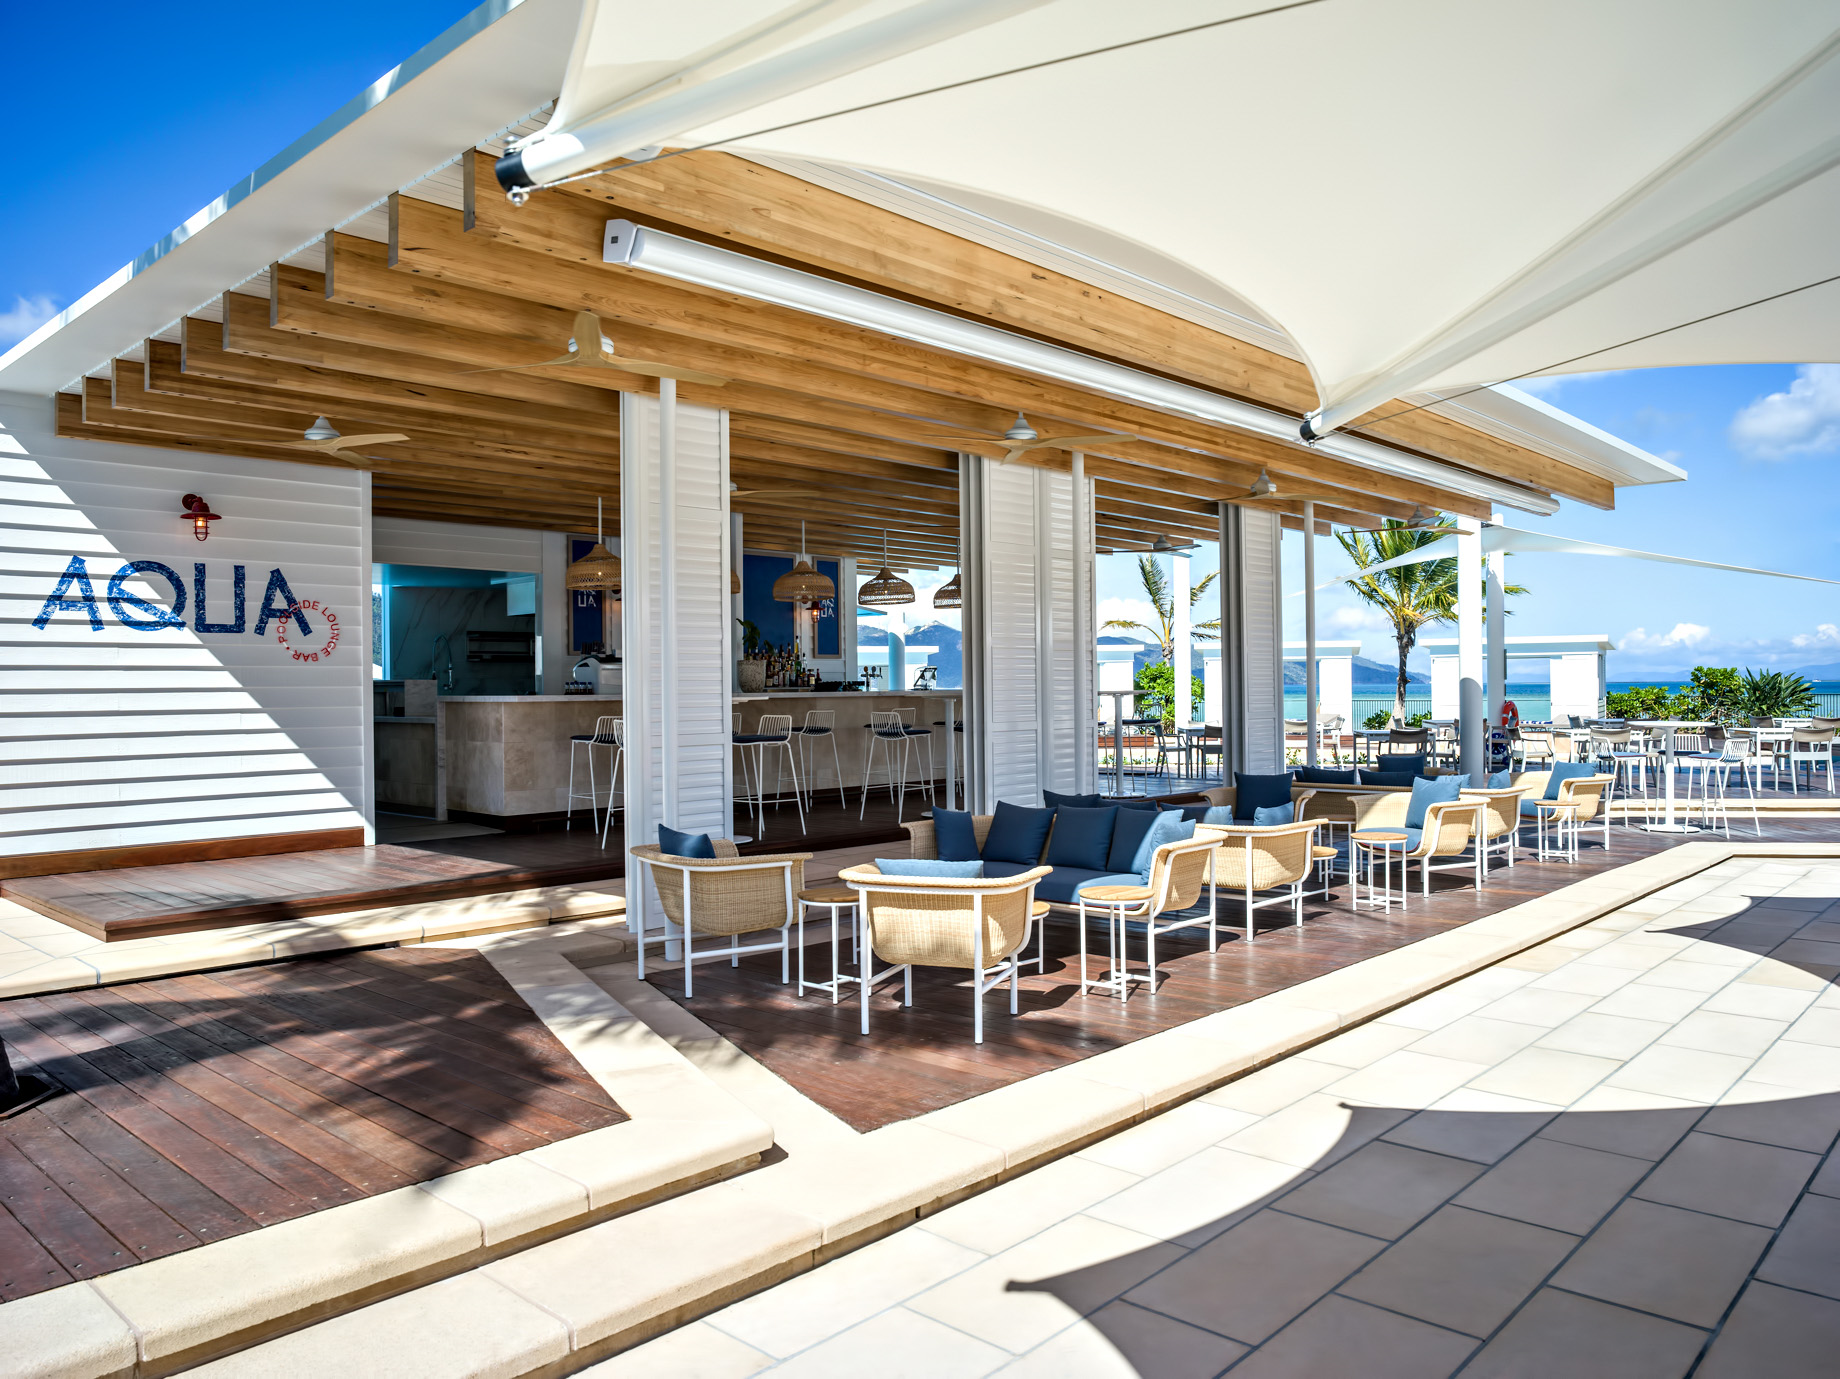 InterContinental Hayman Island Resort - Whitsunday Islands, Australia - Aqua Restaurant Patio